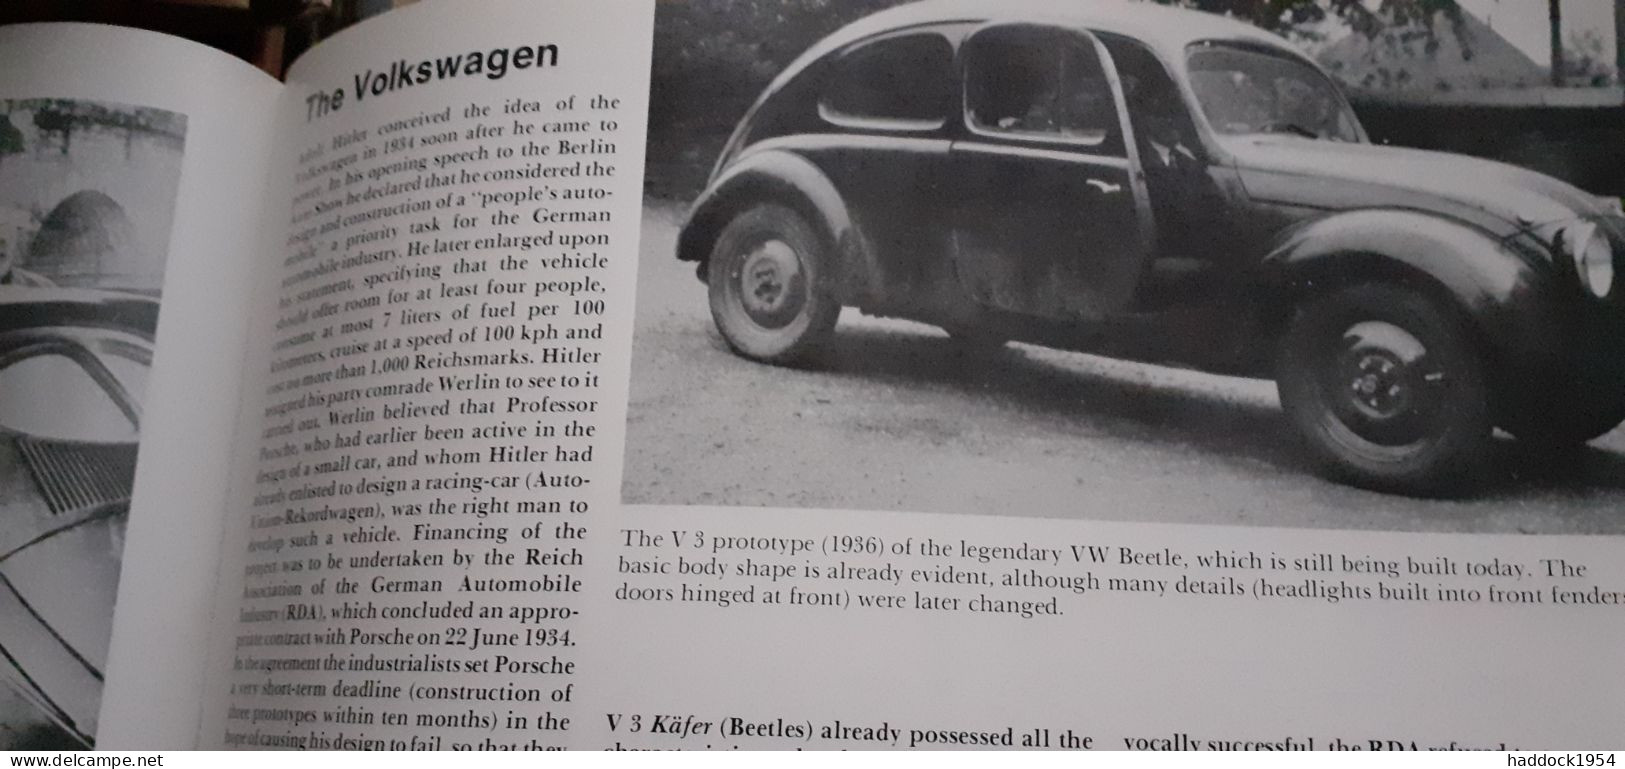 VW At WAR MICHAEL SAWODNY Schiffer Military History 1991 - Oorlog 1939-45